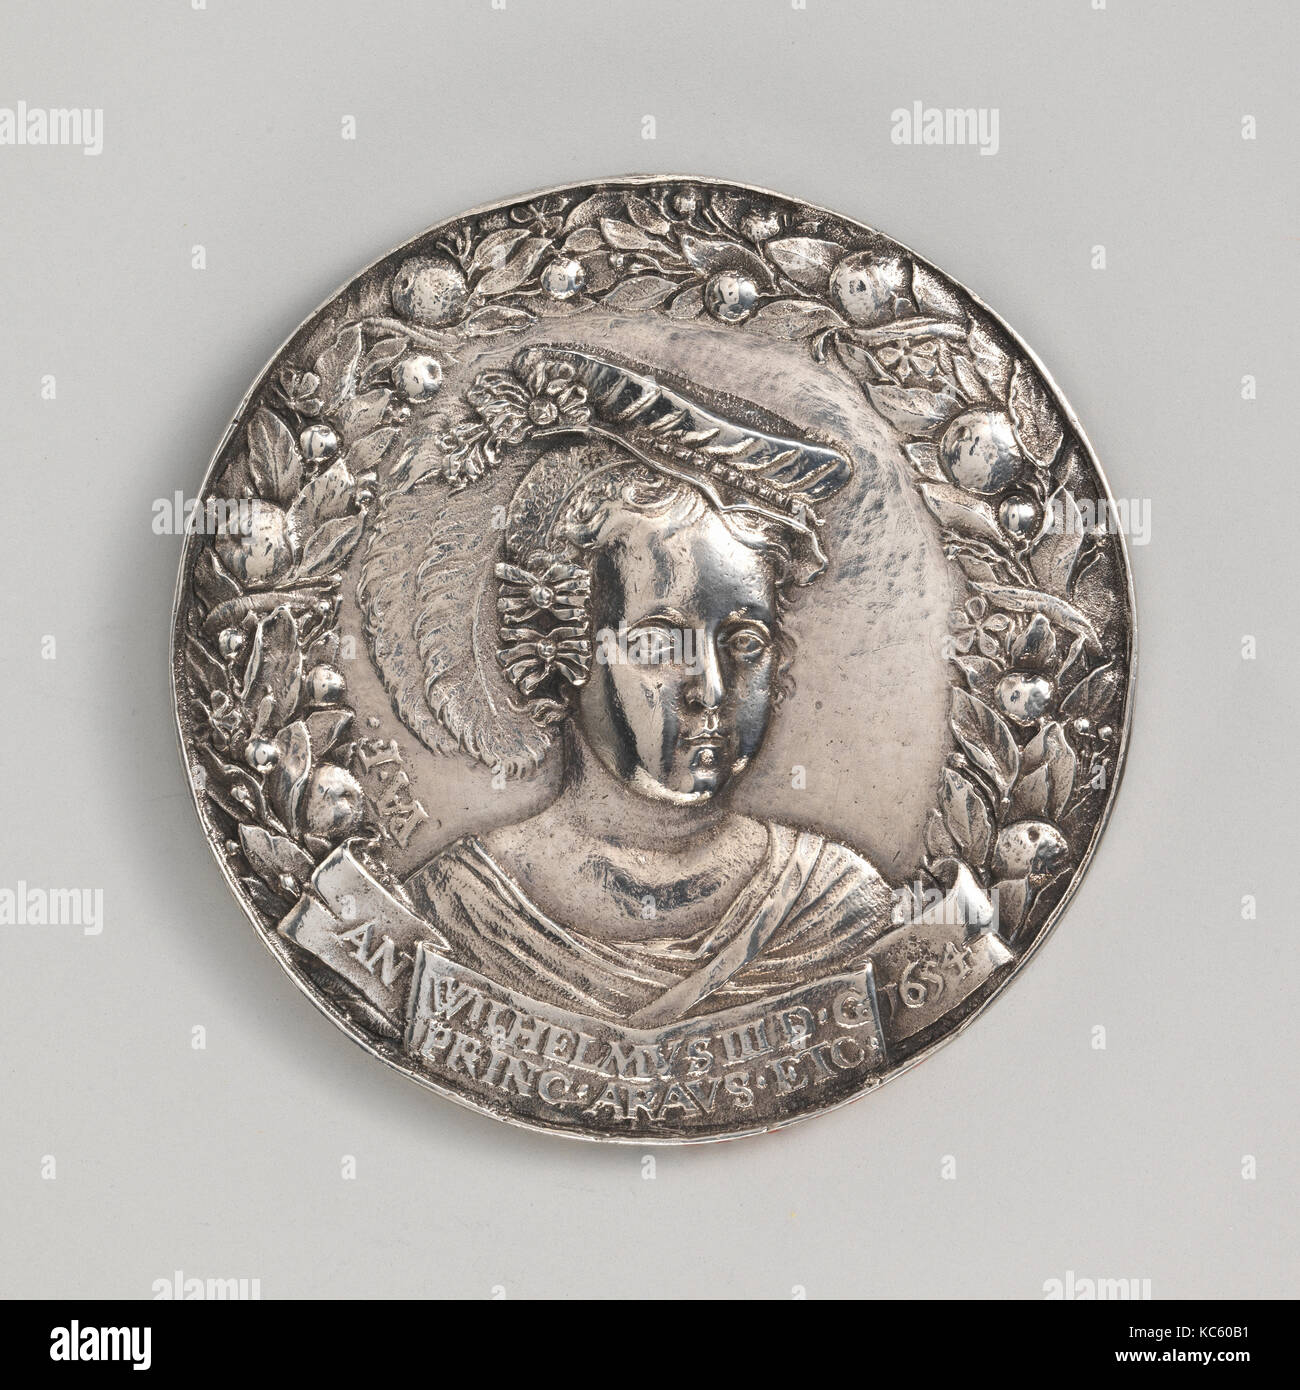 William III Prince of Orange, Medalist: Peter van Abeele, 1654 Stock Photo